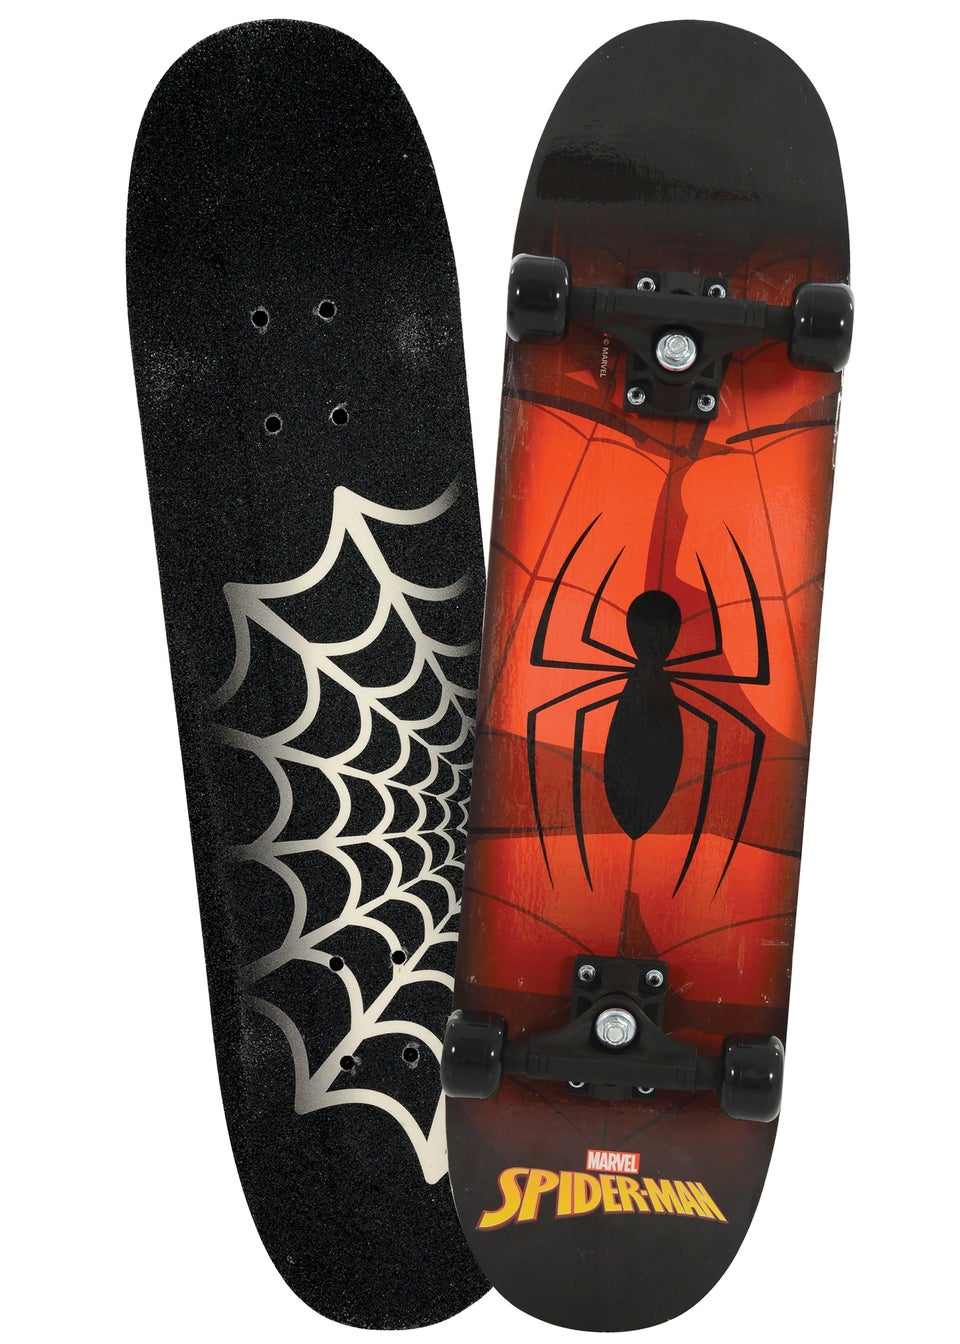 Spiderman Wooden Skateboard